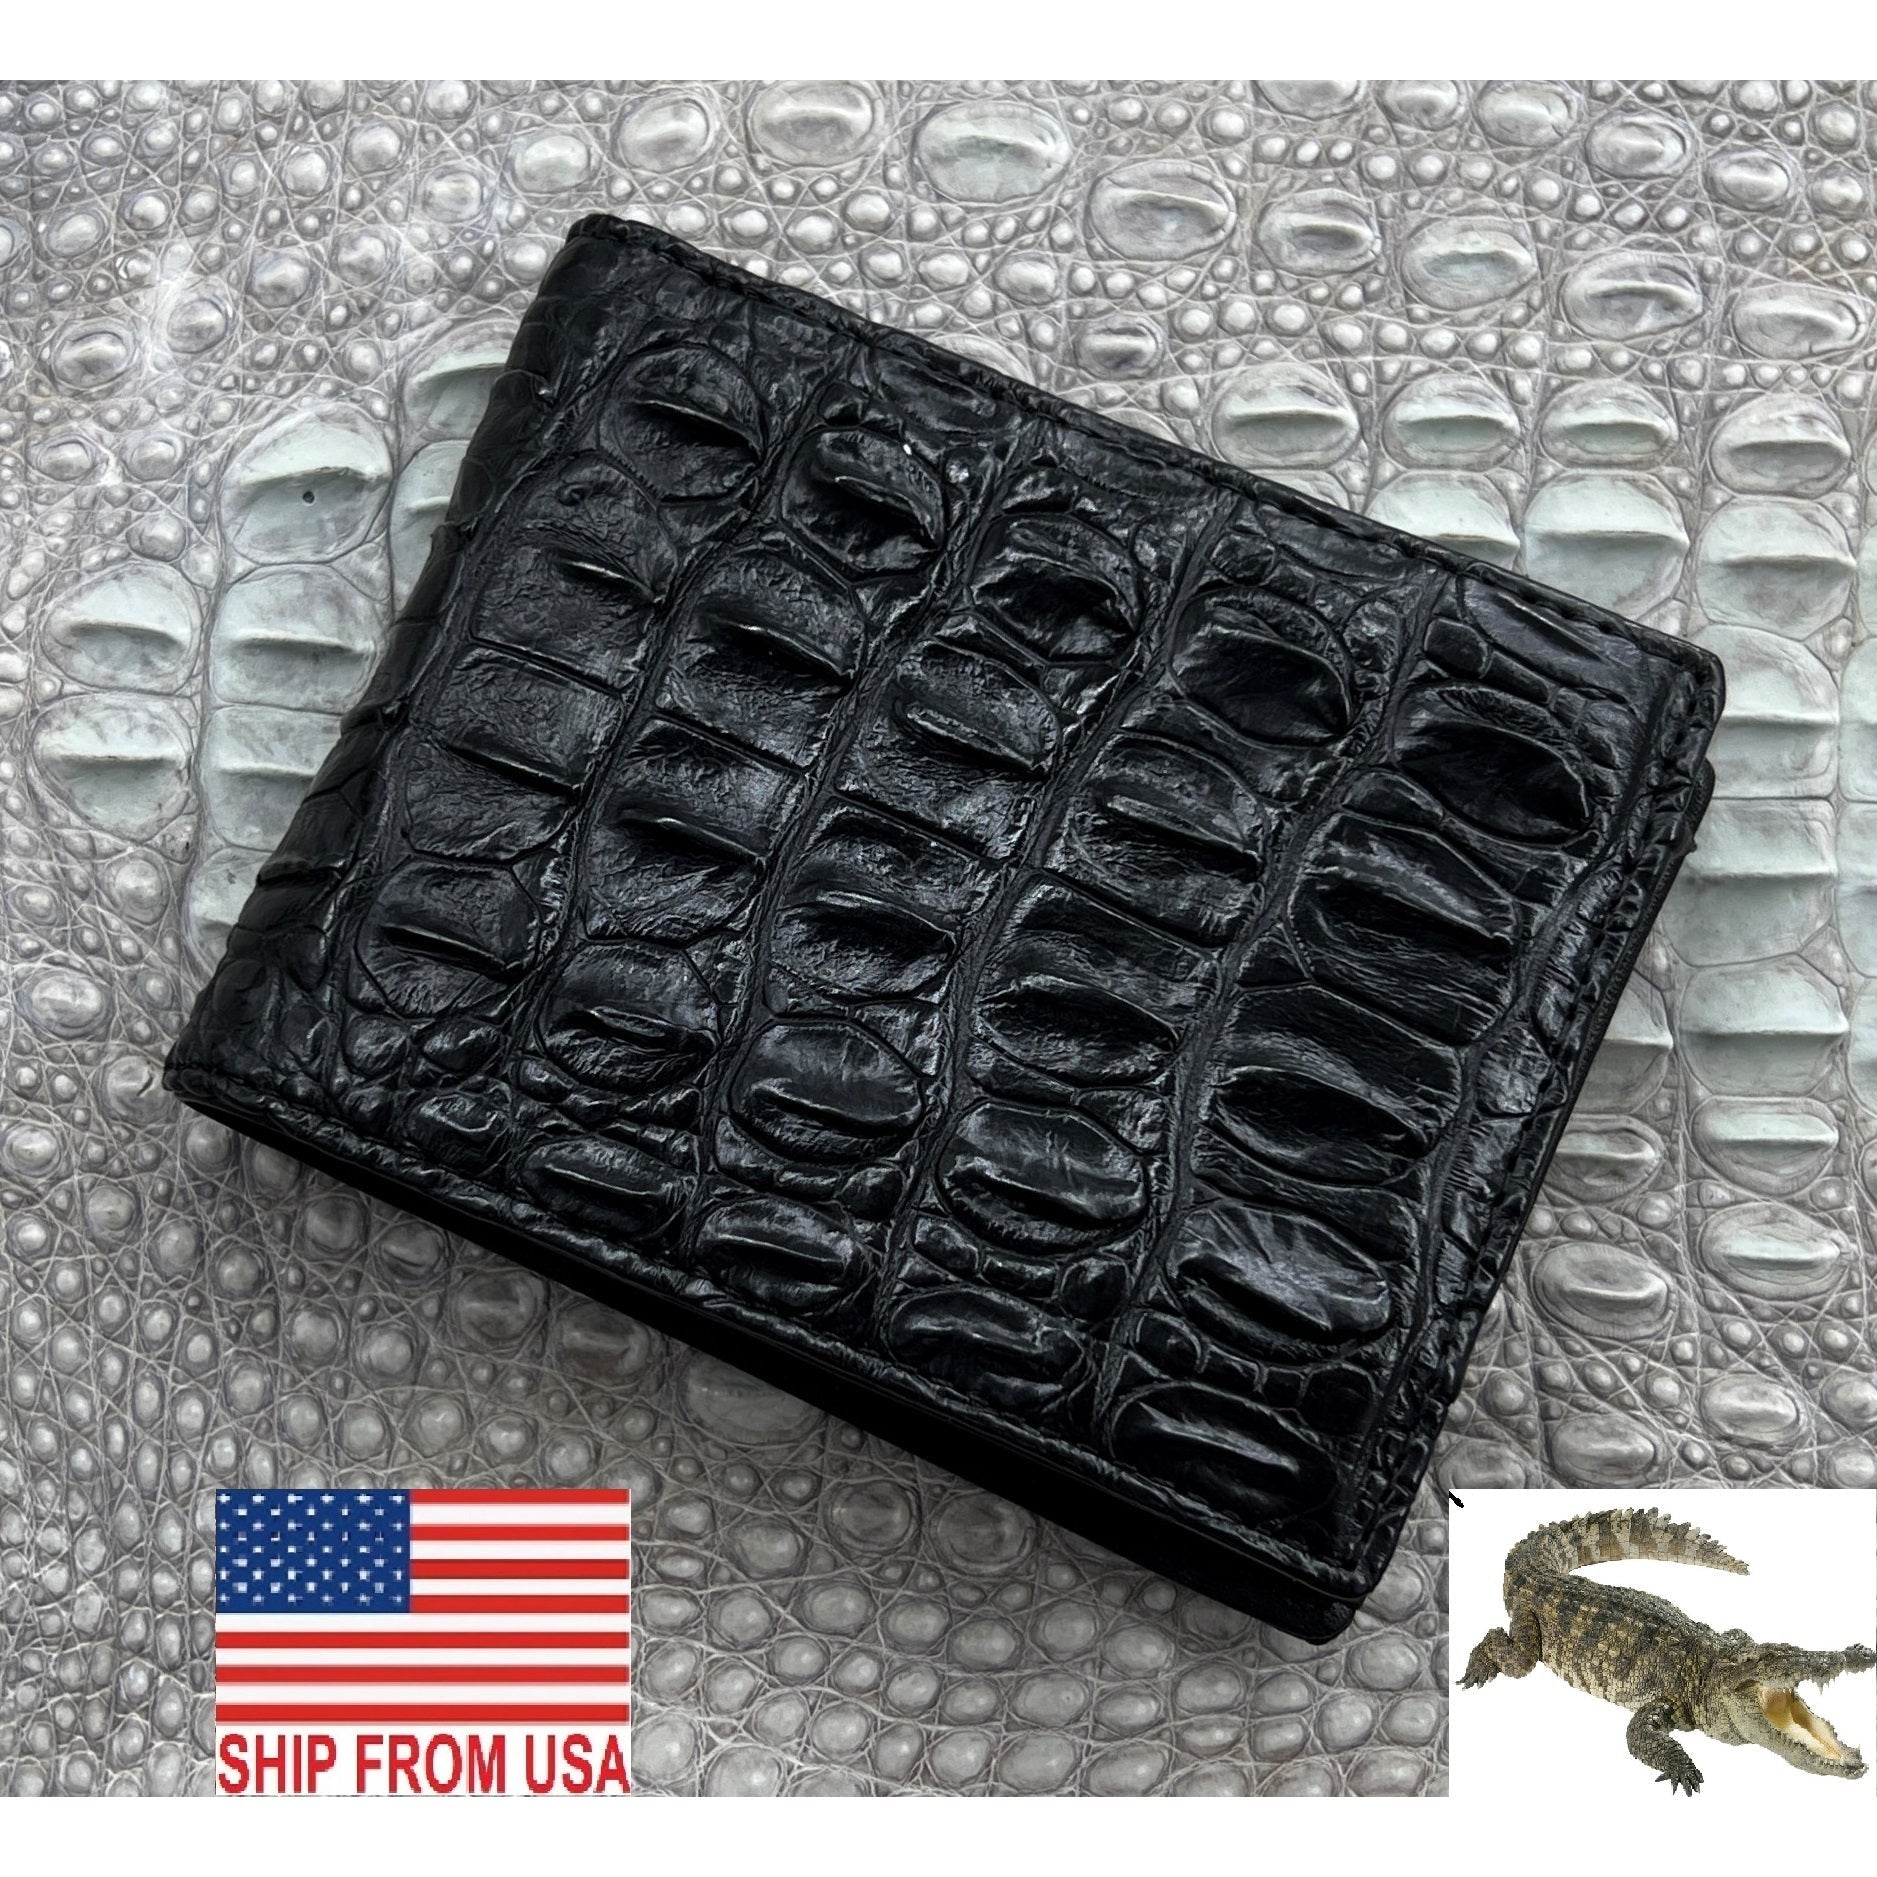 Black Alligator Hornback Skin Bifold Wallet For Men | Handmade Crocodile Leather Wallet RFID Blocking | VL4566 - Vinacreations